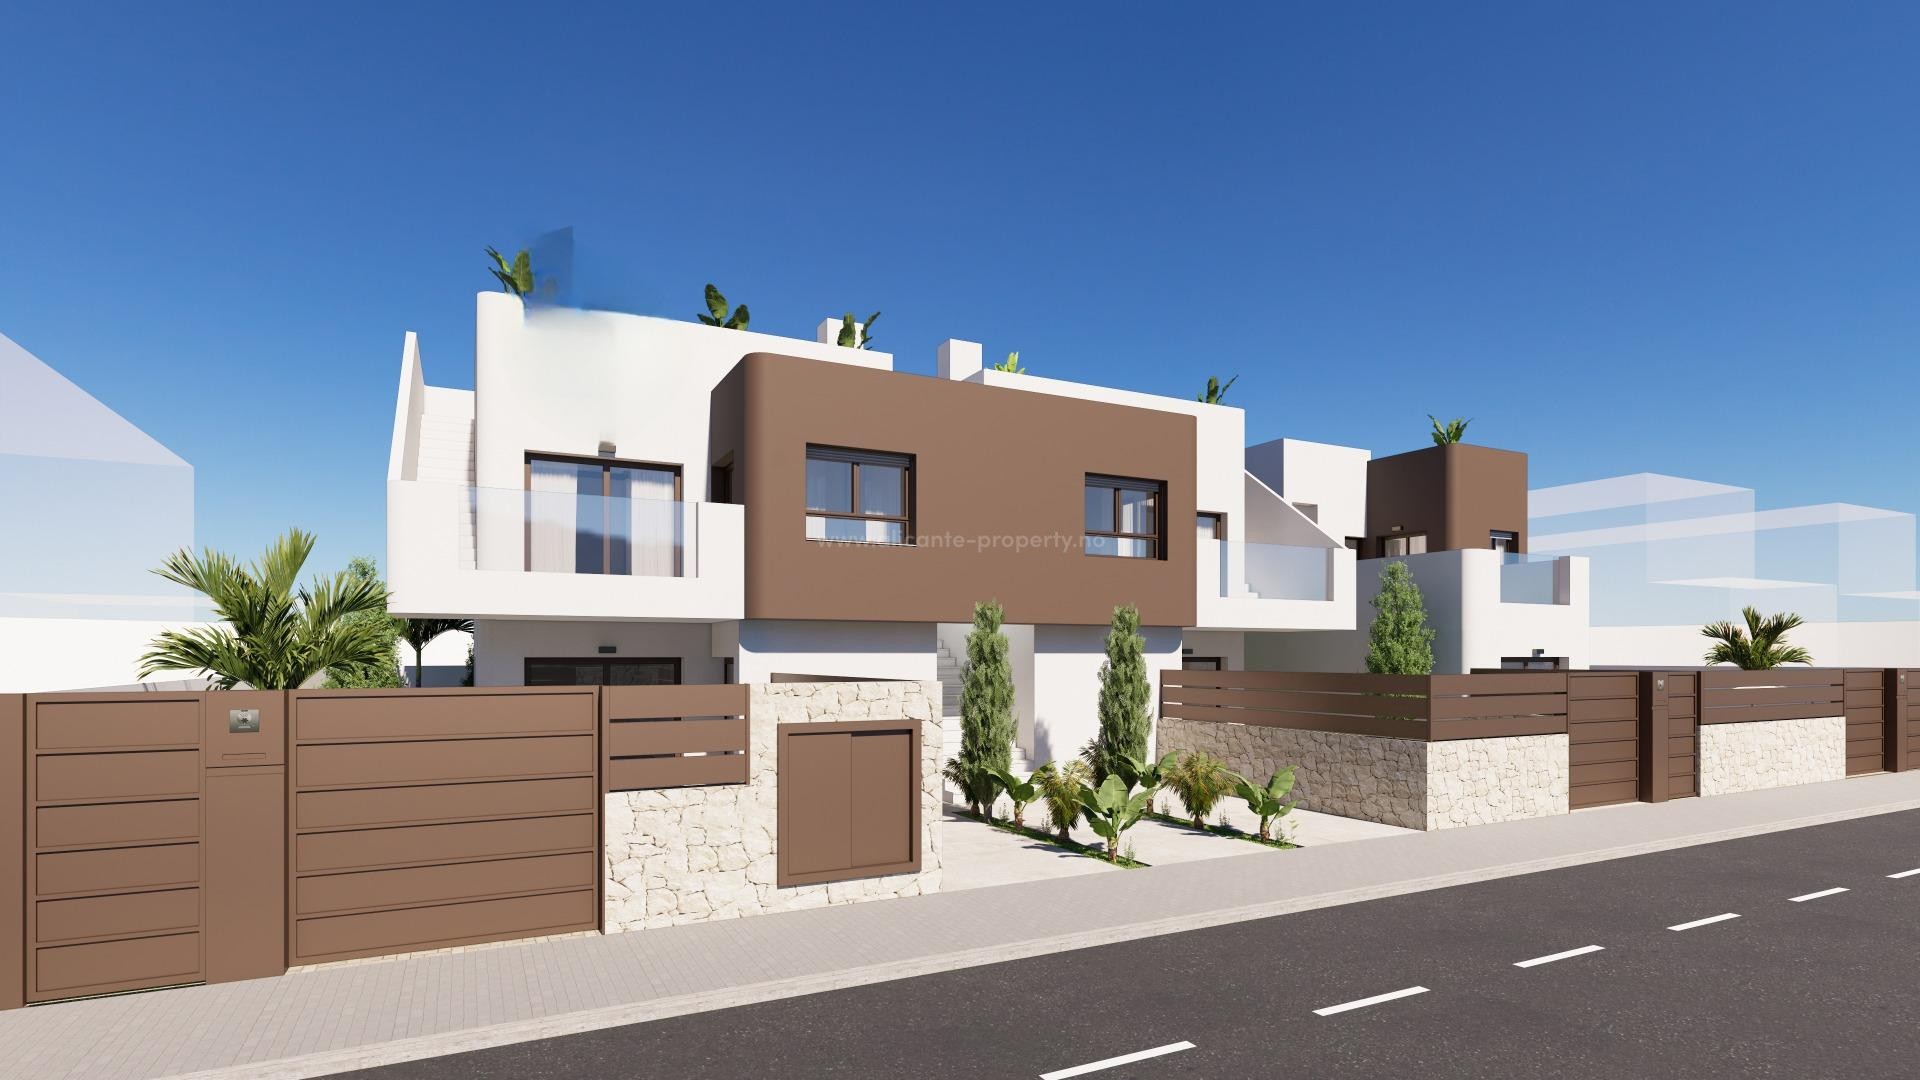 New bungalow apartments in Torre de La Horadada, 2 bedrooms, 2 bathrooms, 50 meters from Las Higuericas beach, large gardens or large terraces, great views